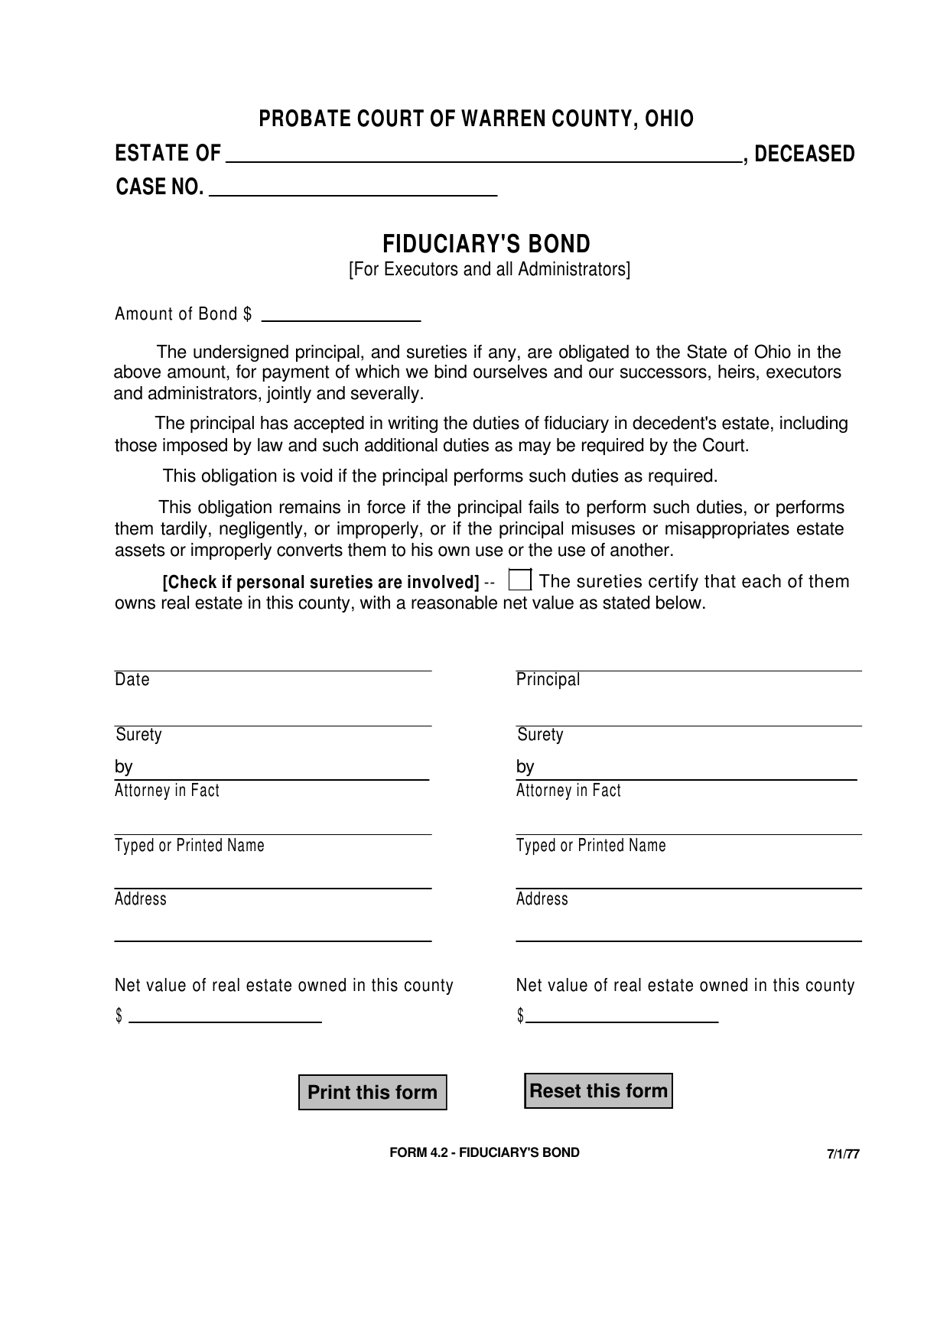 Form 4.2 Fiduciarys Bond - Warren County, Ohio, Page 1